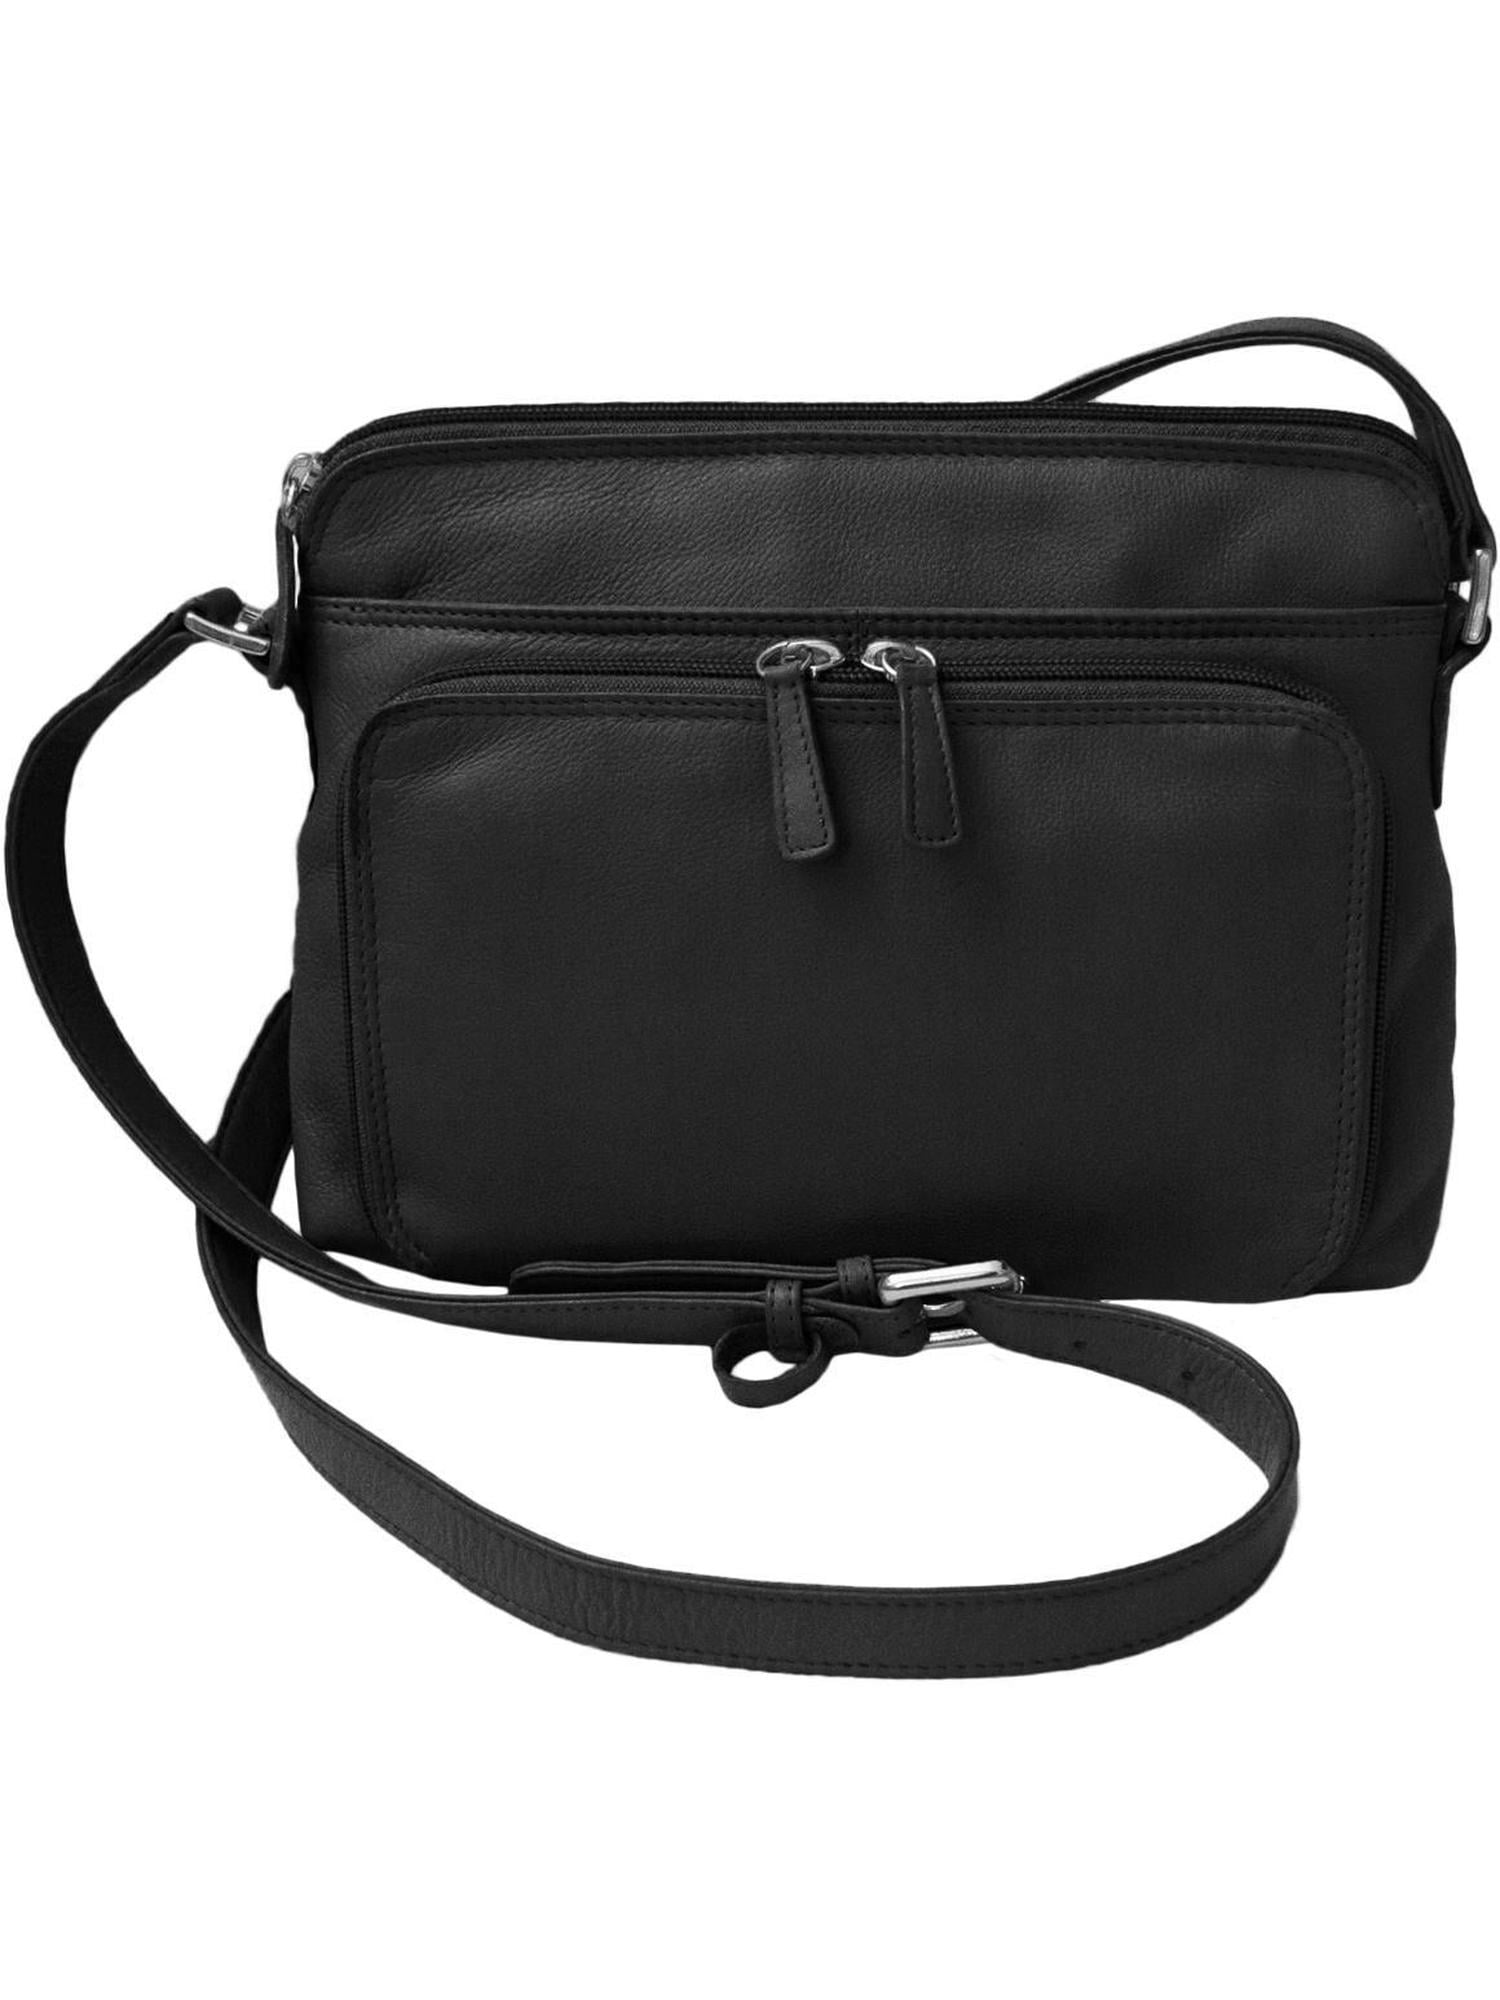 Classy Women Handbag PU Leather Purse Shoulder Bag with Attach Accessory